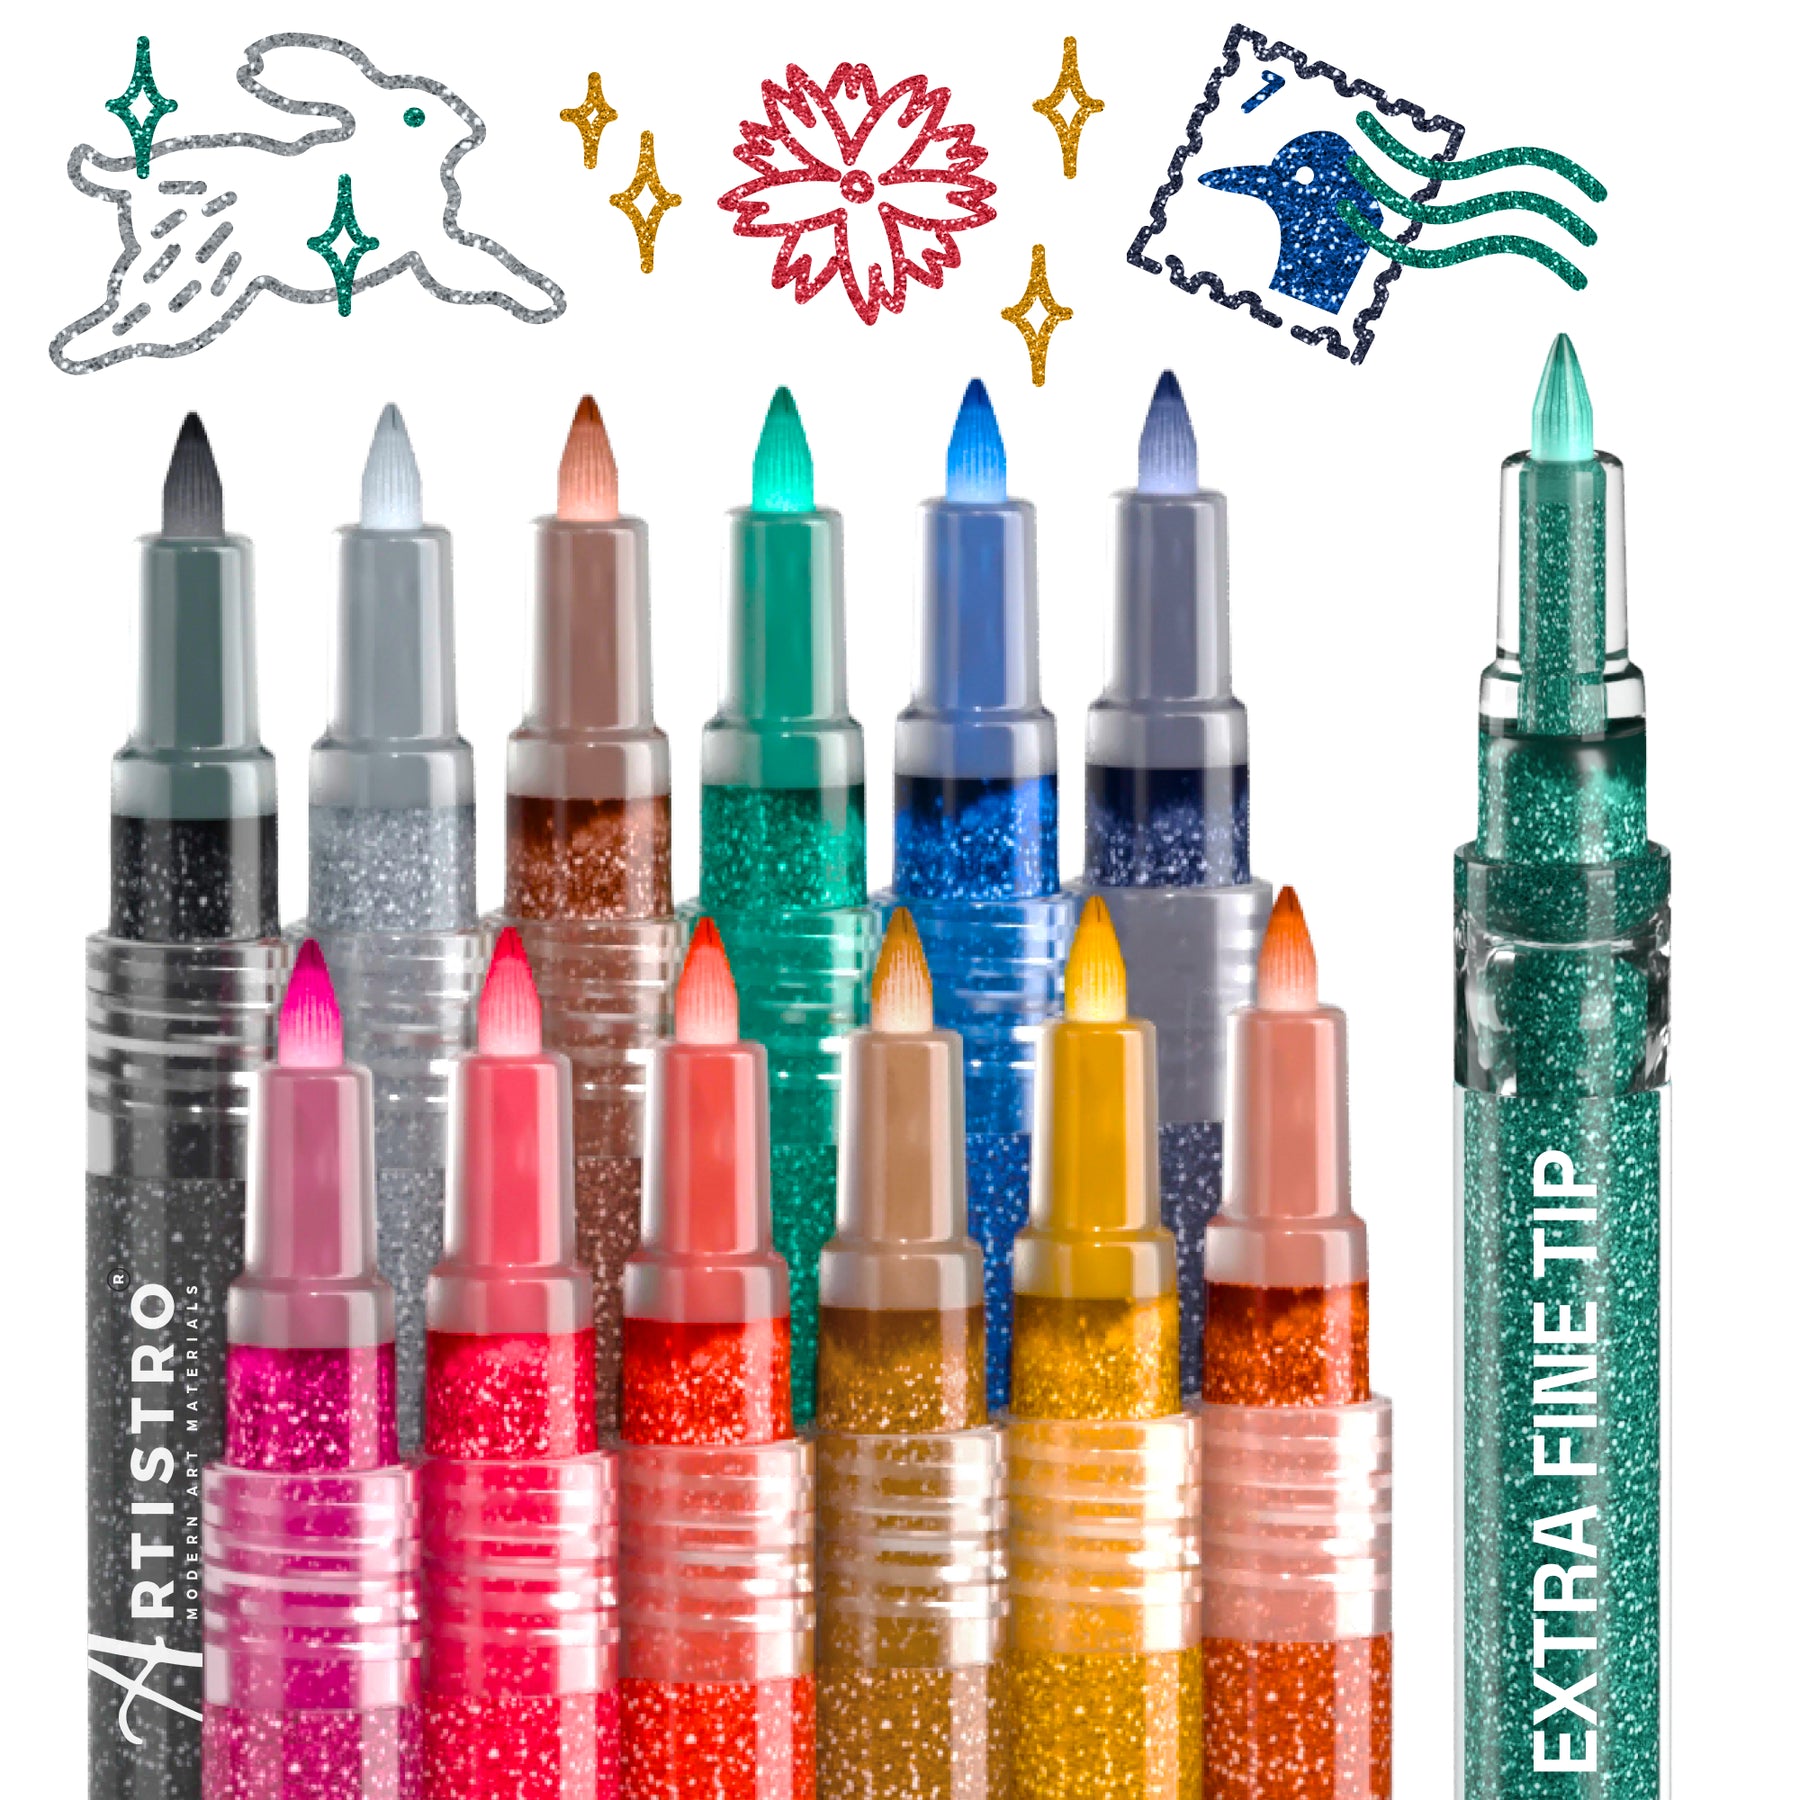 Bright Glitter Pens by Creatology™